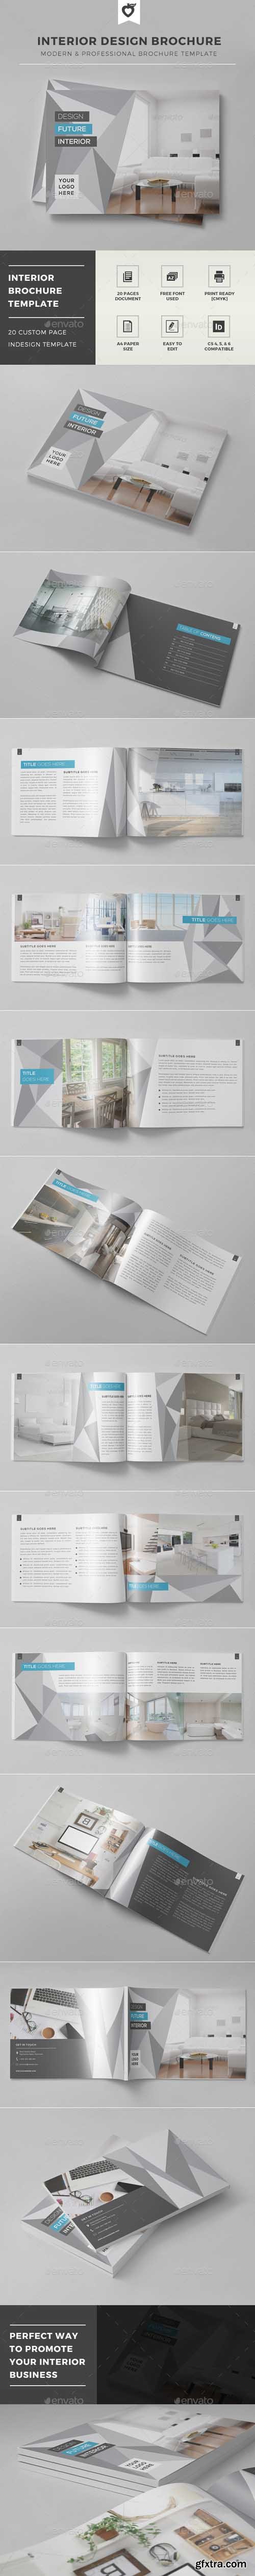 GR - Interior Design Brochure Template 12474610